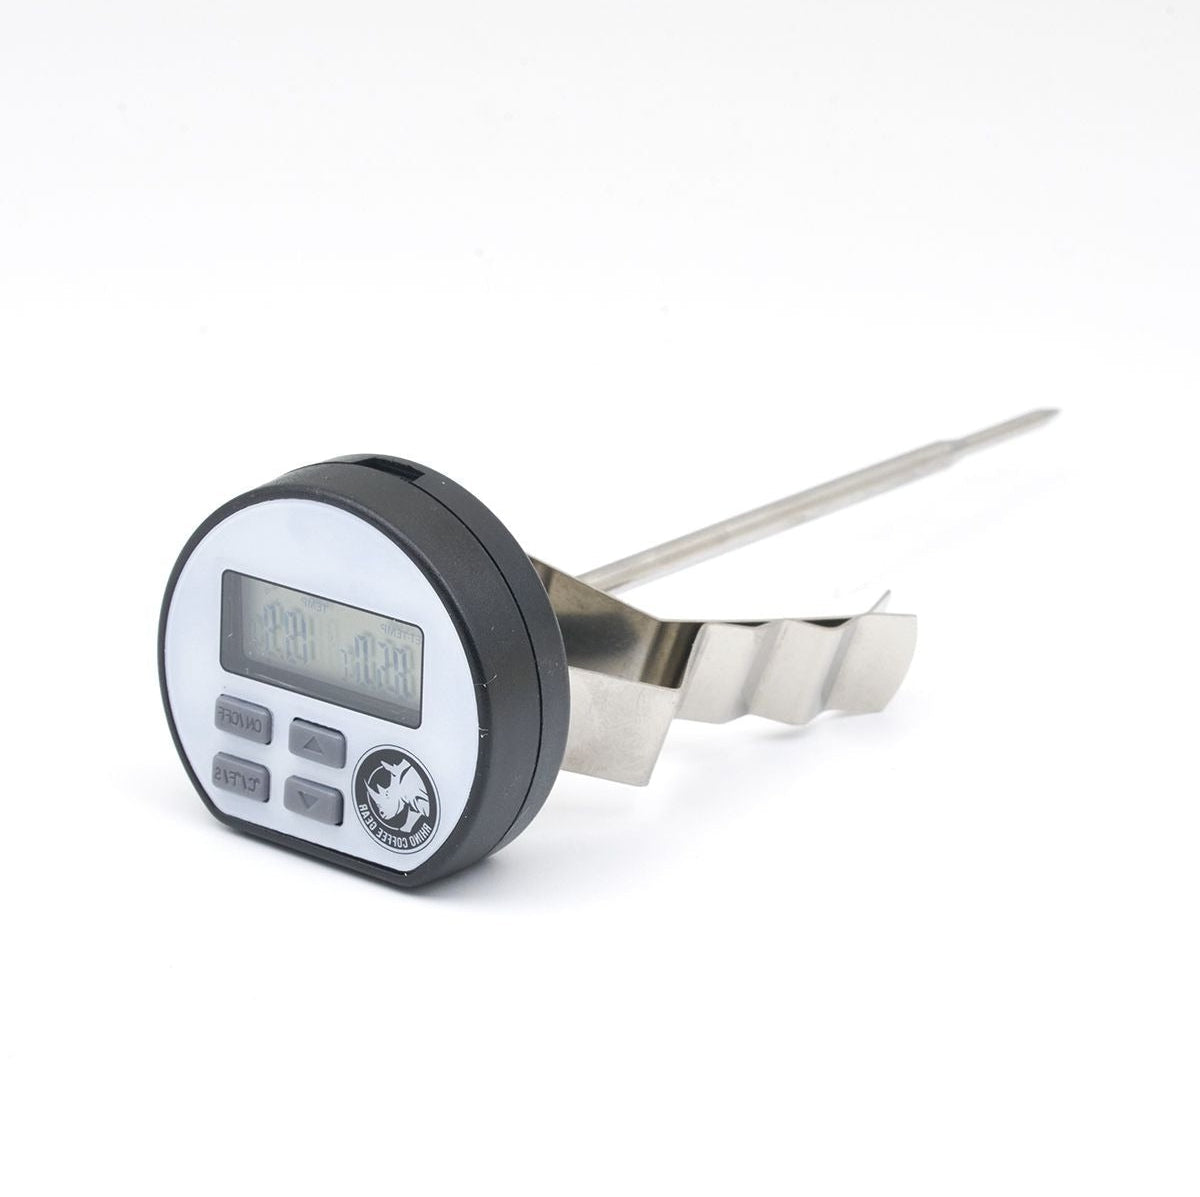 Rhino - Digital Thermometer - RWTHERDS